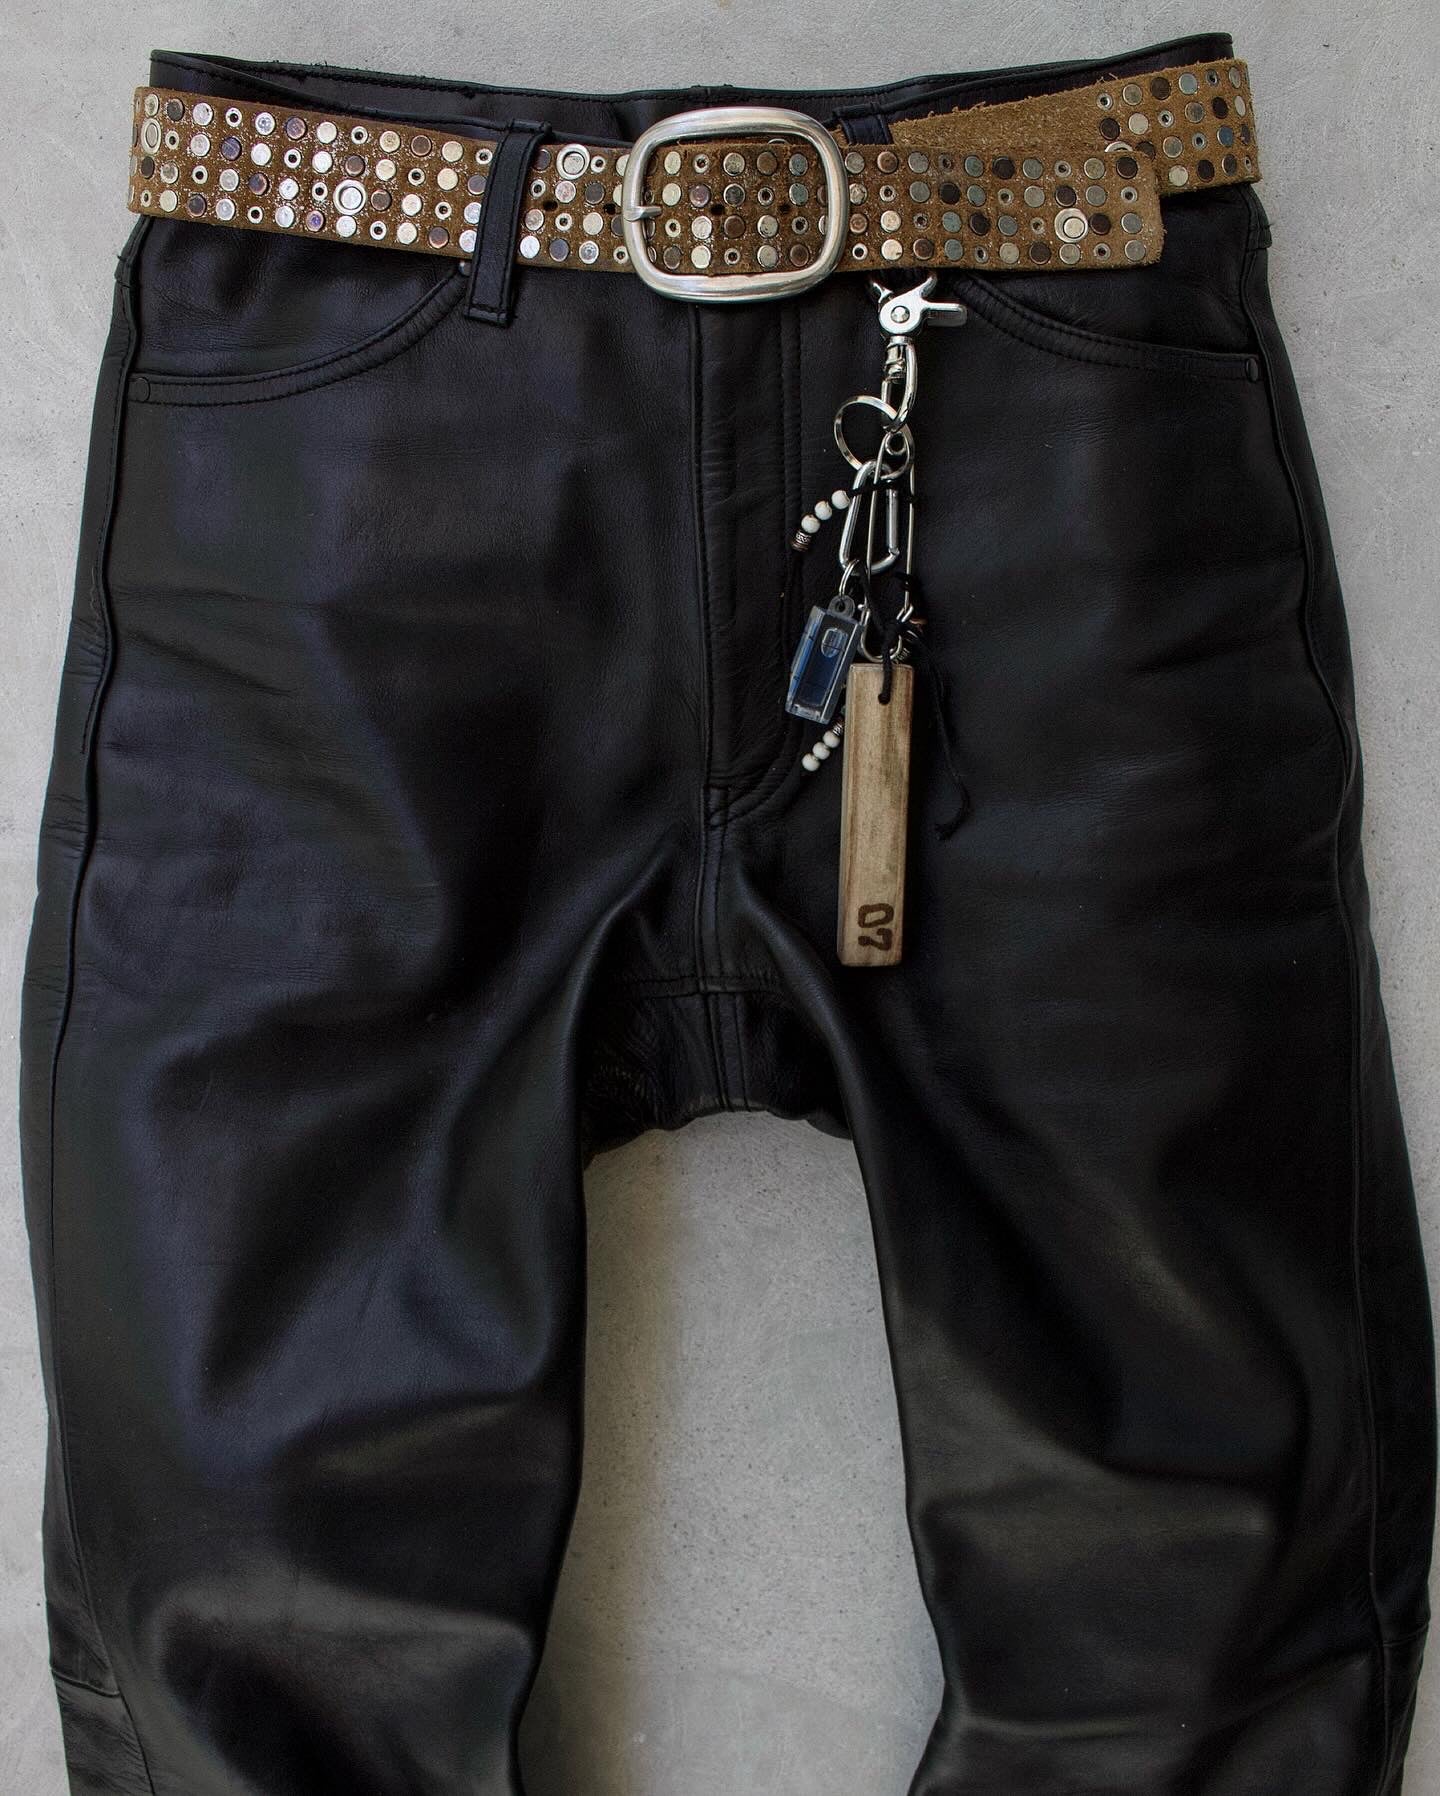 Kadoya K’s Leather 00s Raw Cowhide Leather Flare Motorcycle Pants